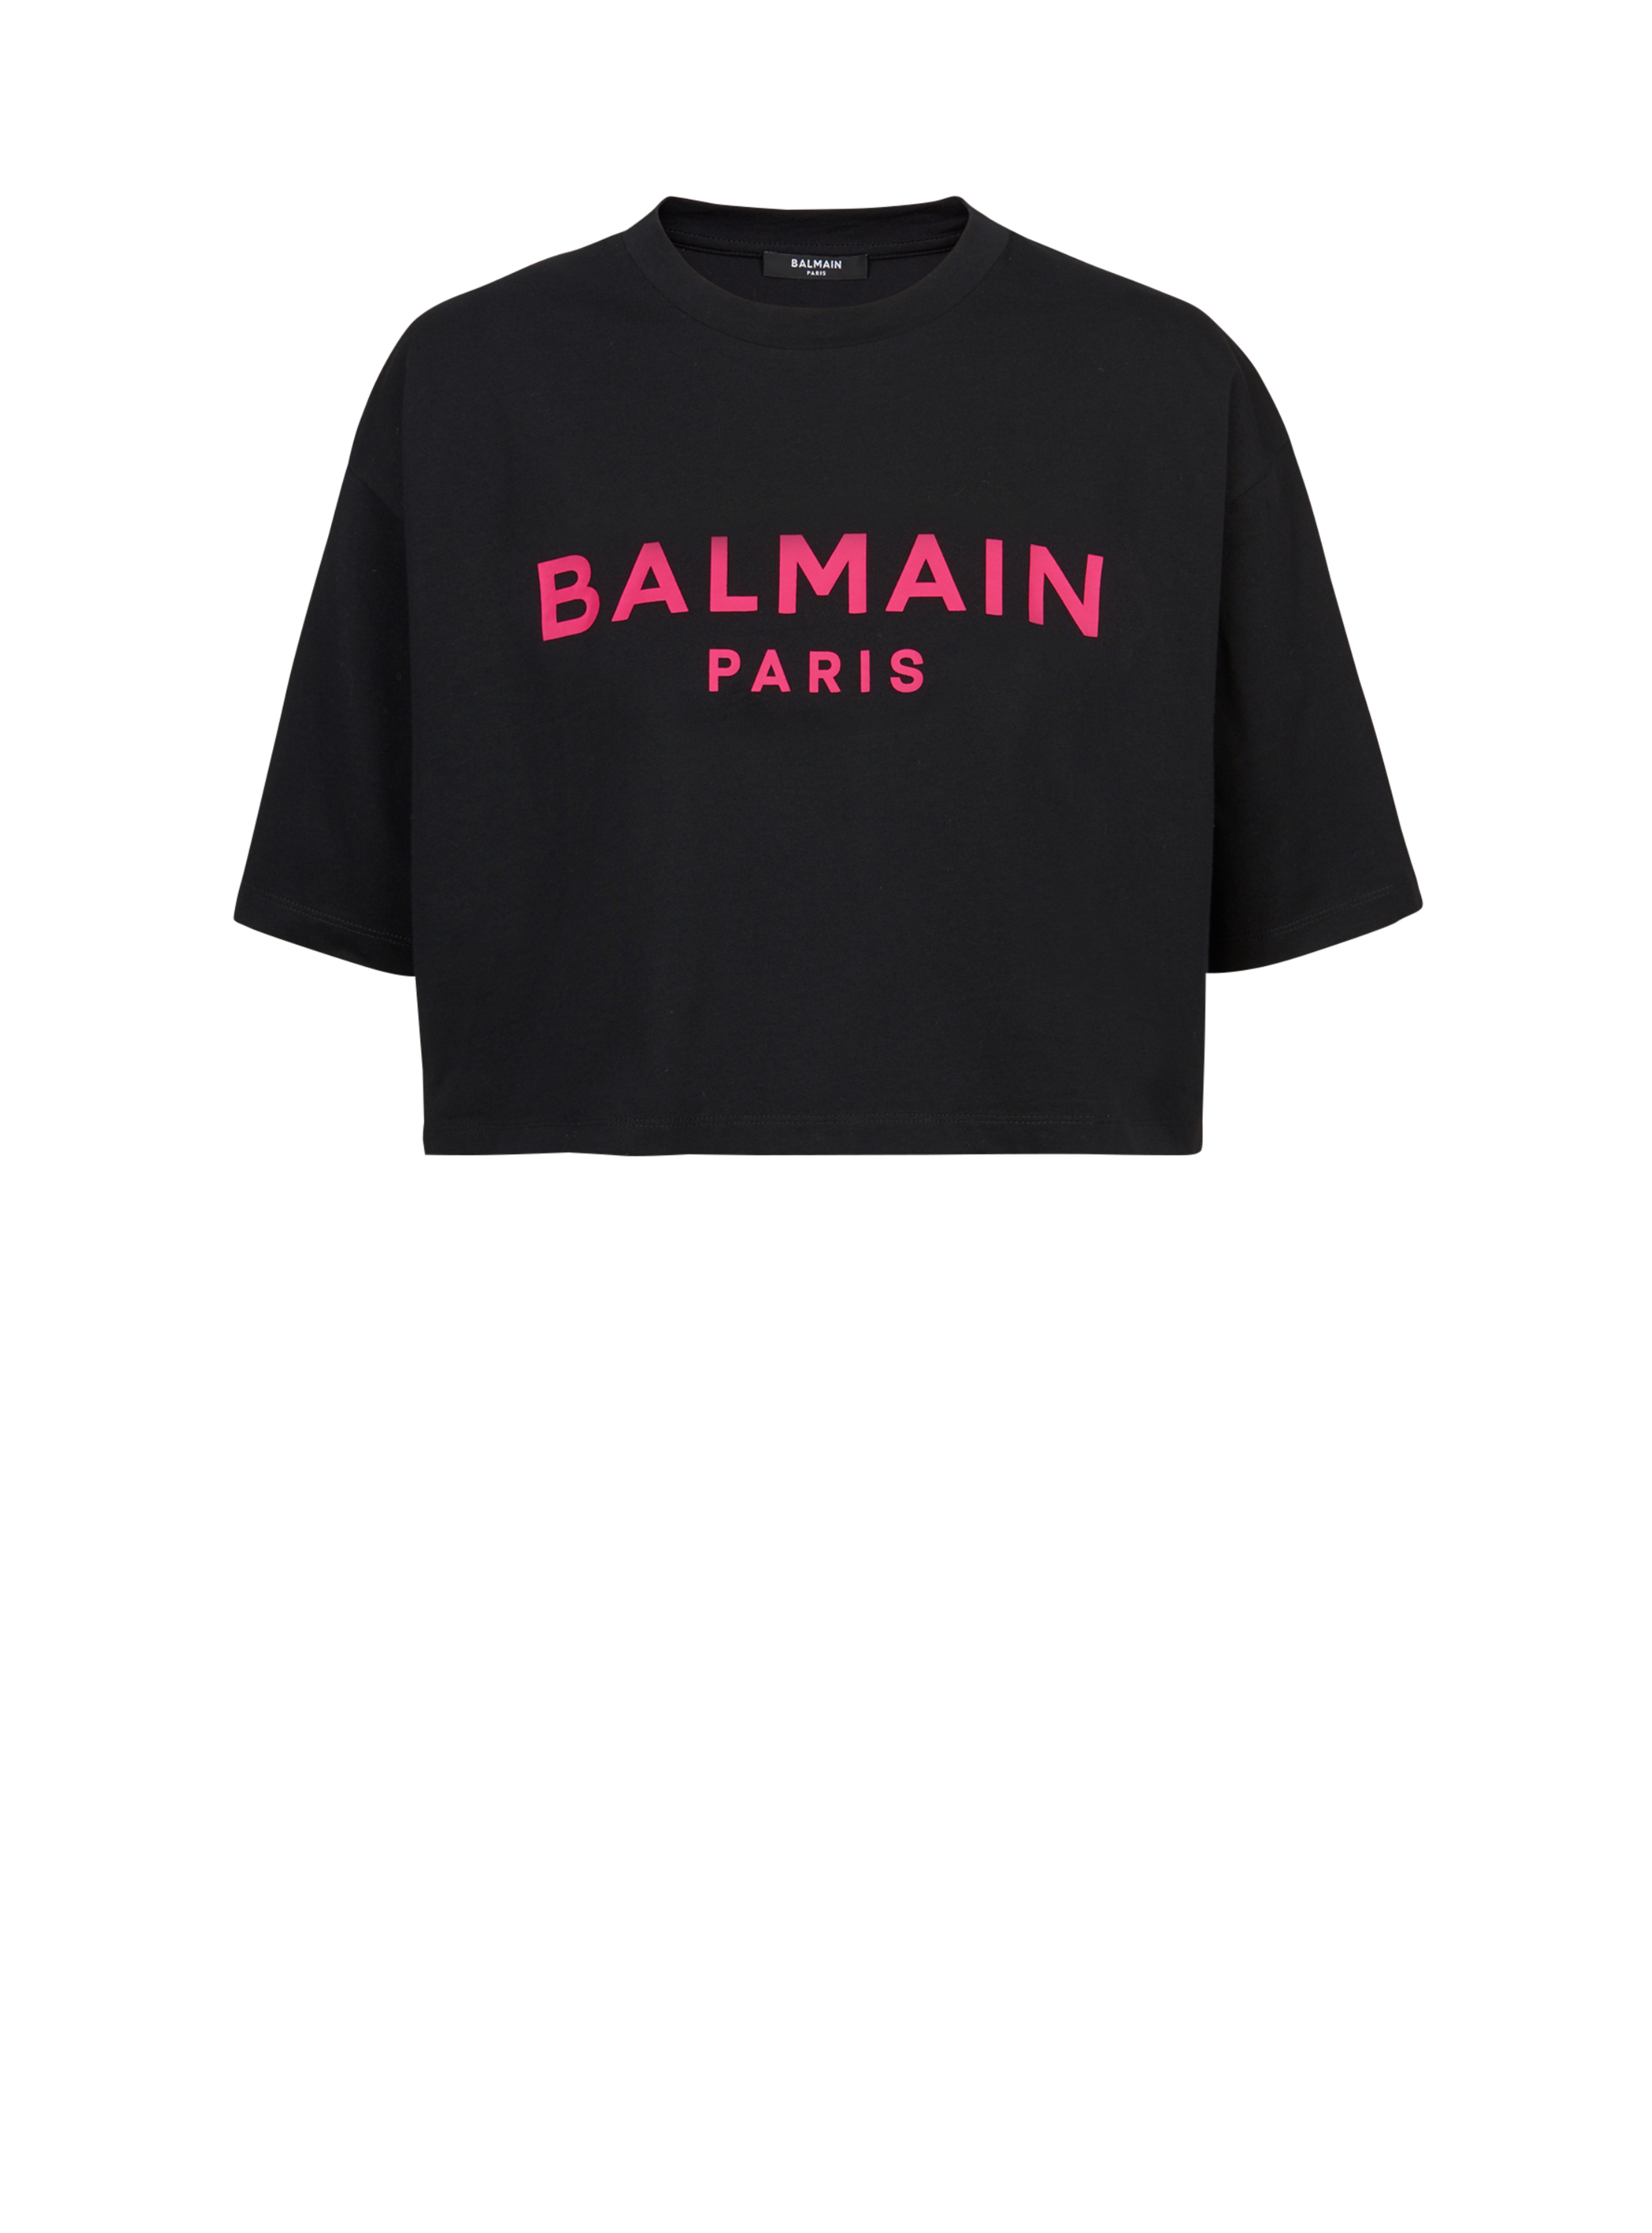 EXCLUSIVE - Cropped cotton T-shirt with Balmain logo print, pink